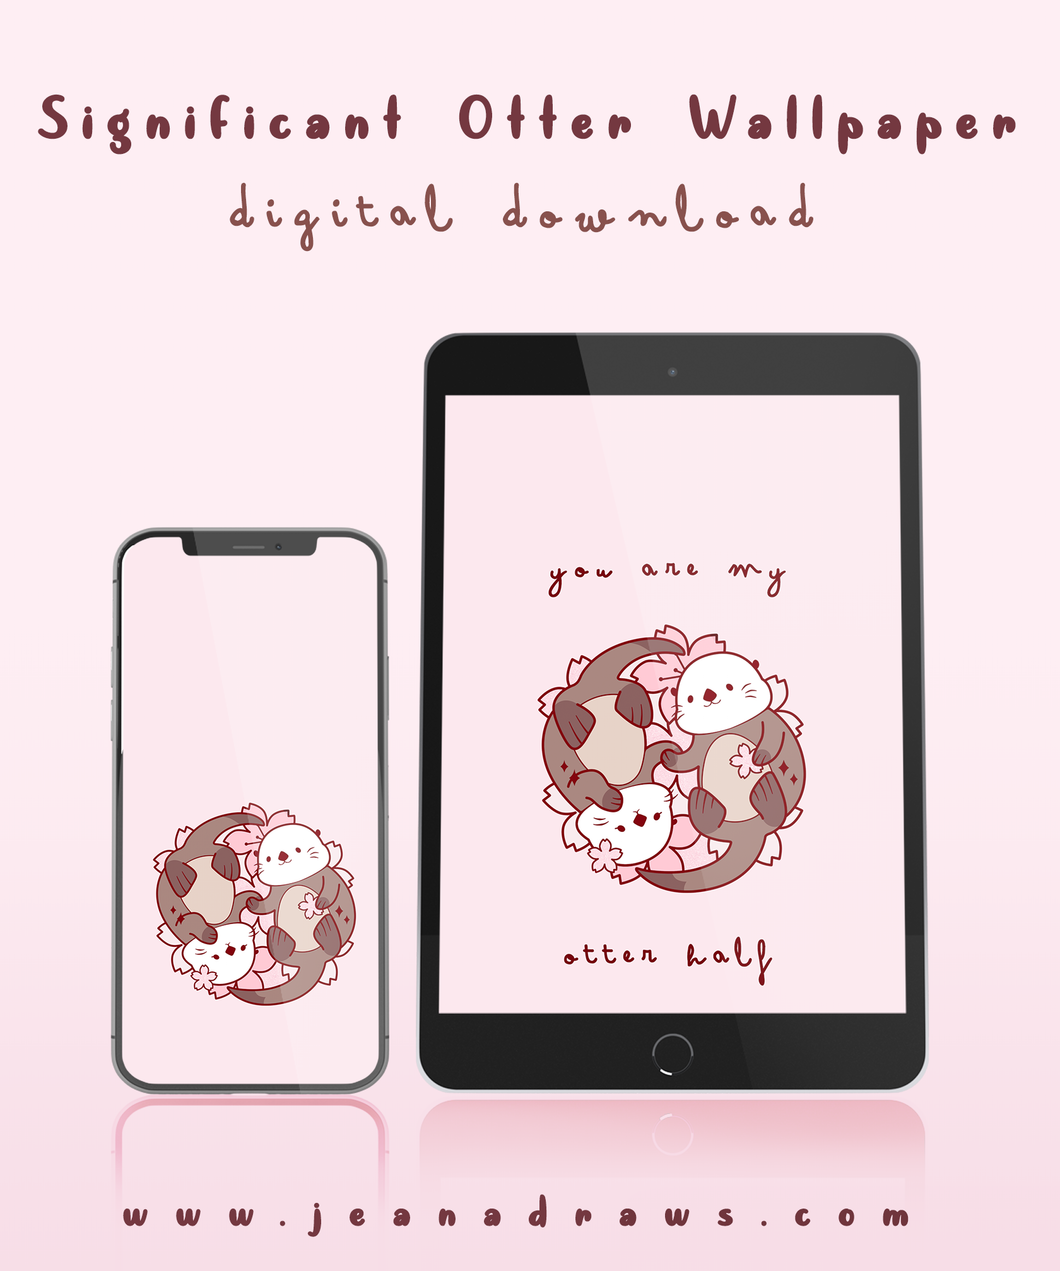 Significant Otter Wallpaper [Digital Download]